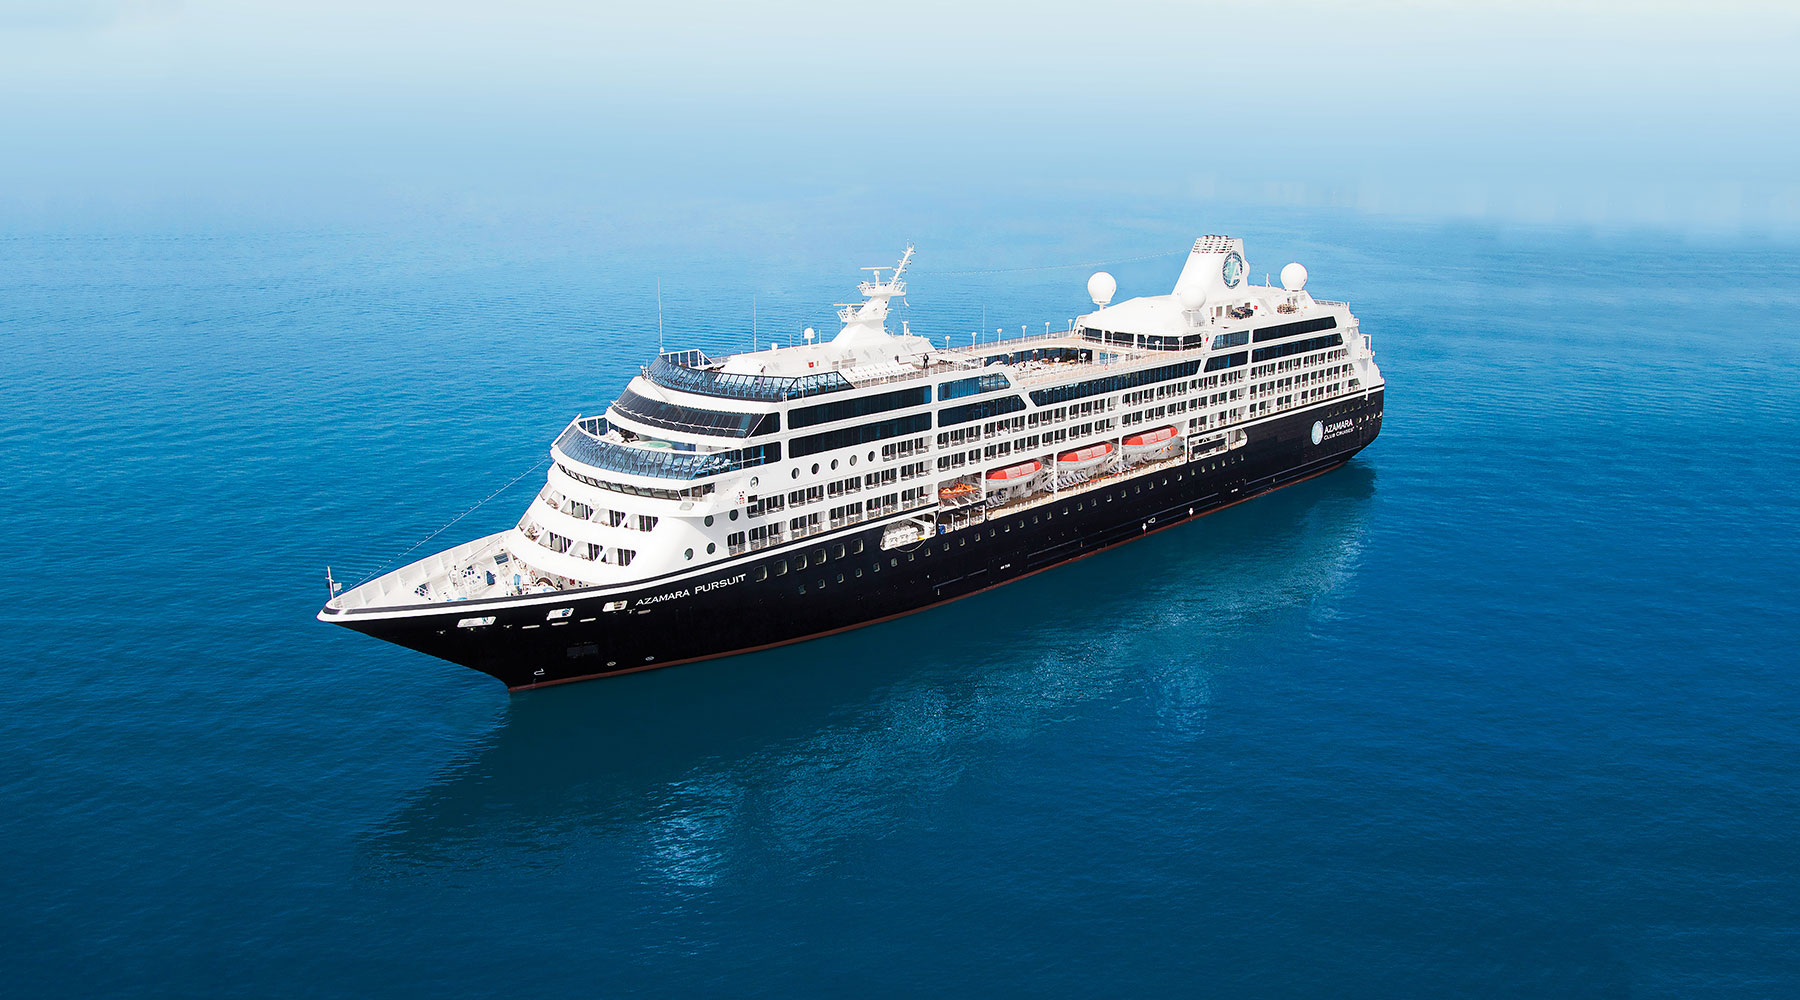 Cruise ship Azamara Pursuit in “hot water”